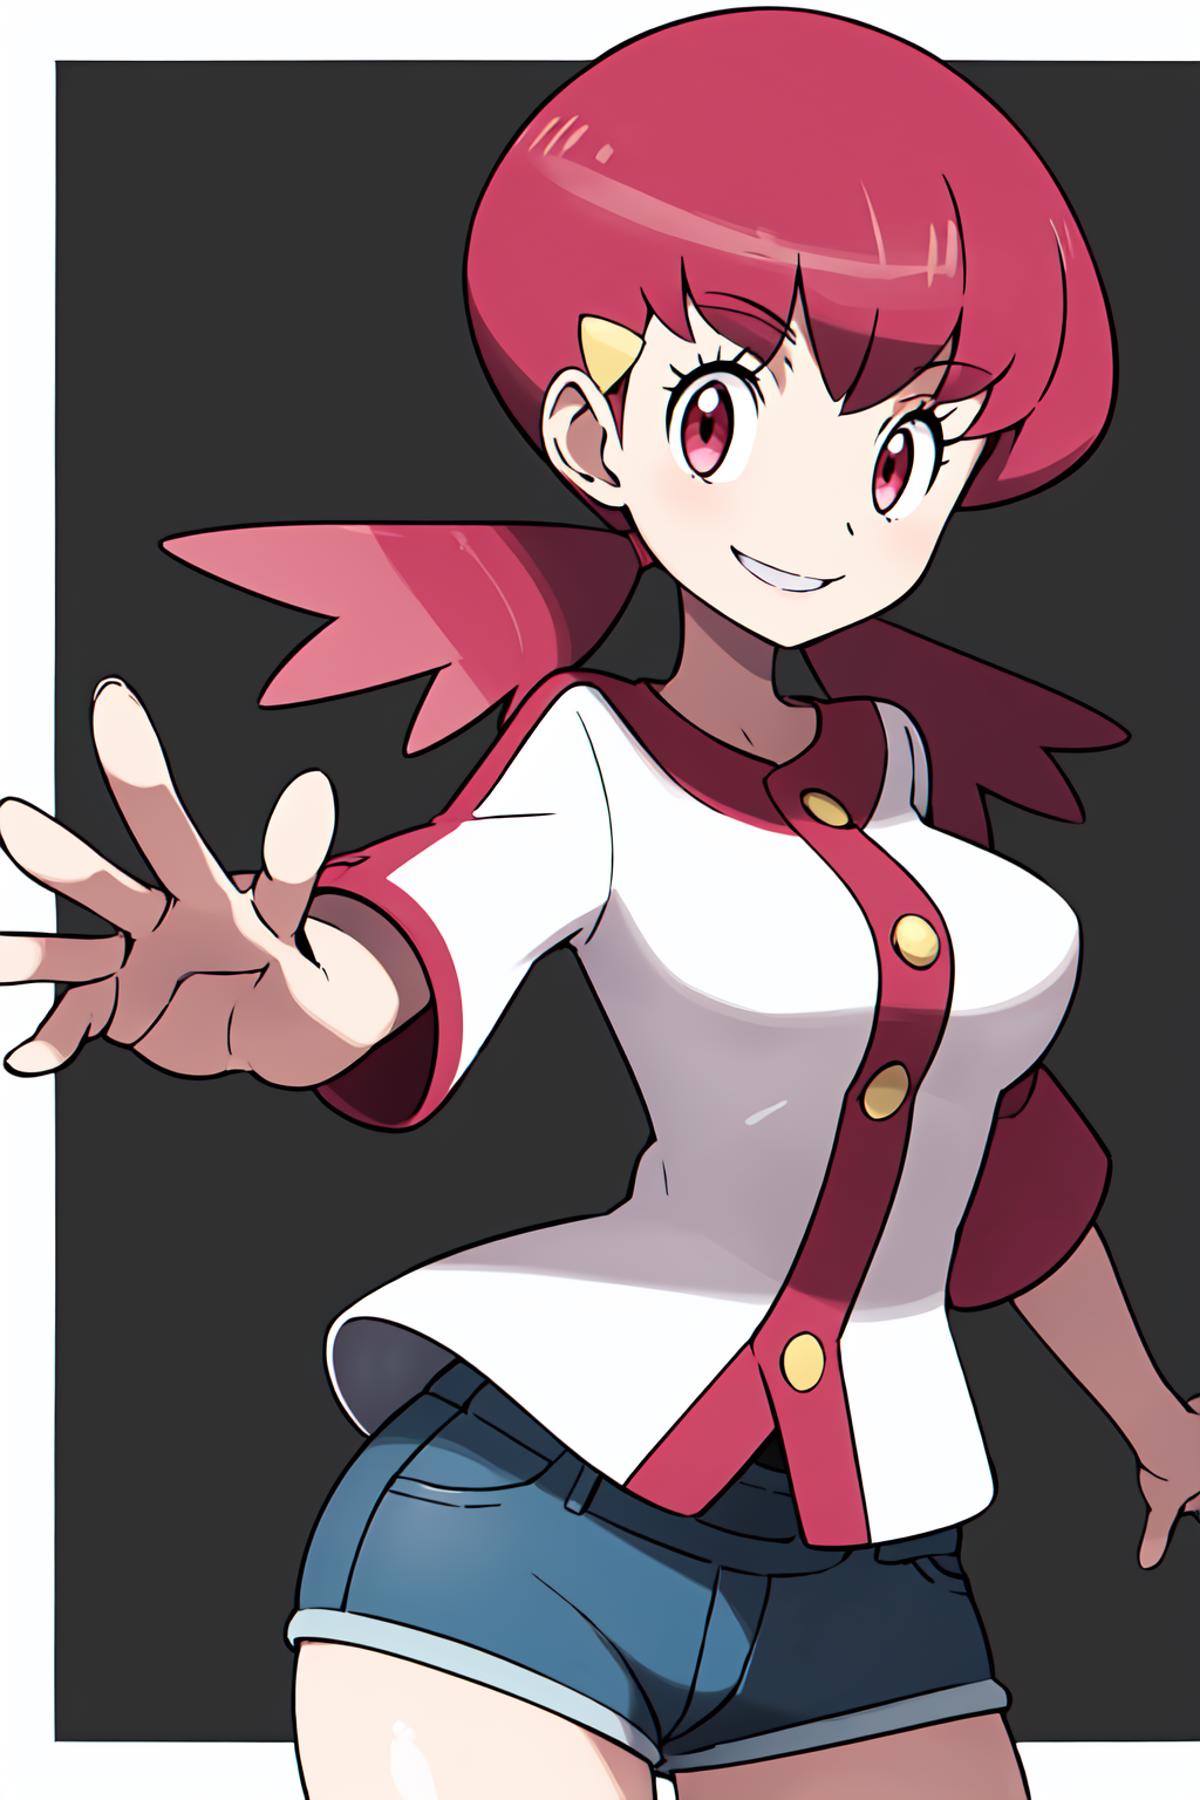 Whitney - Pokemon image by bittercat